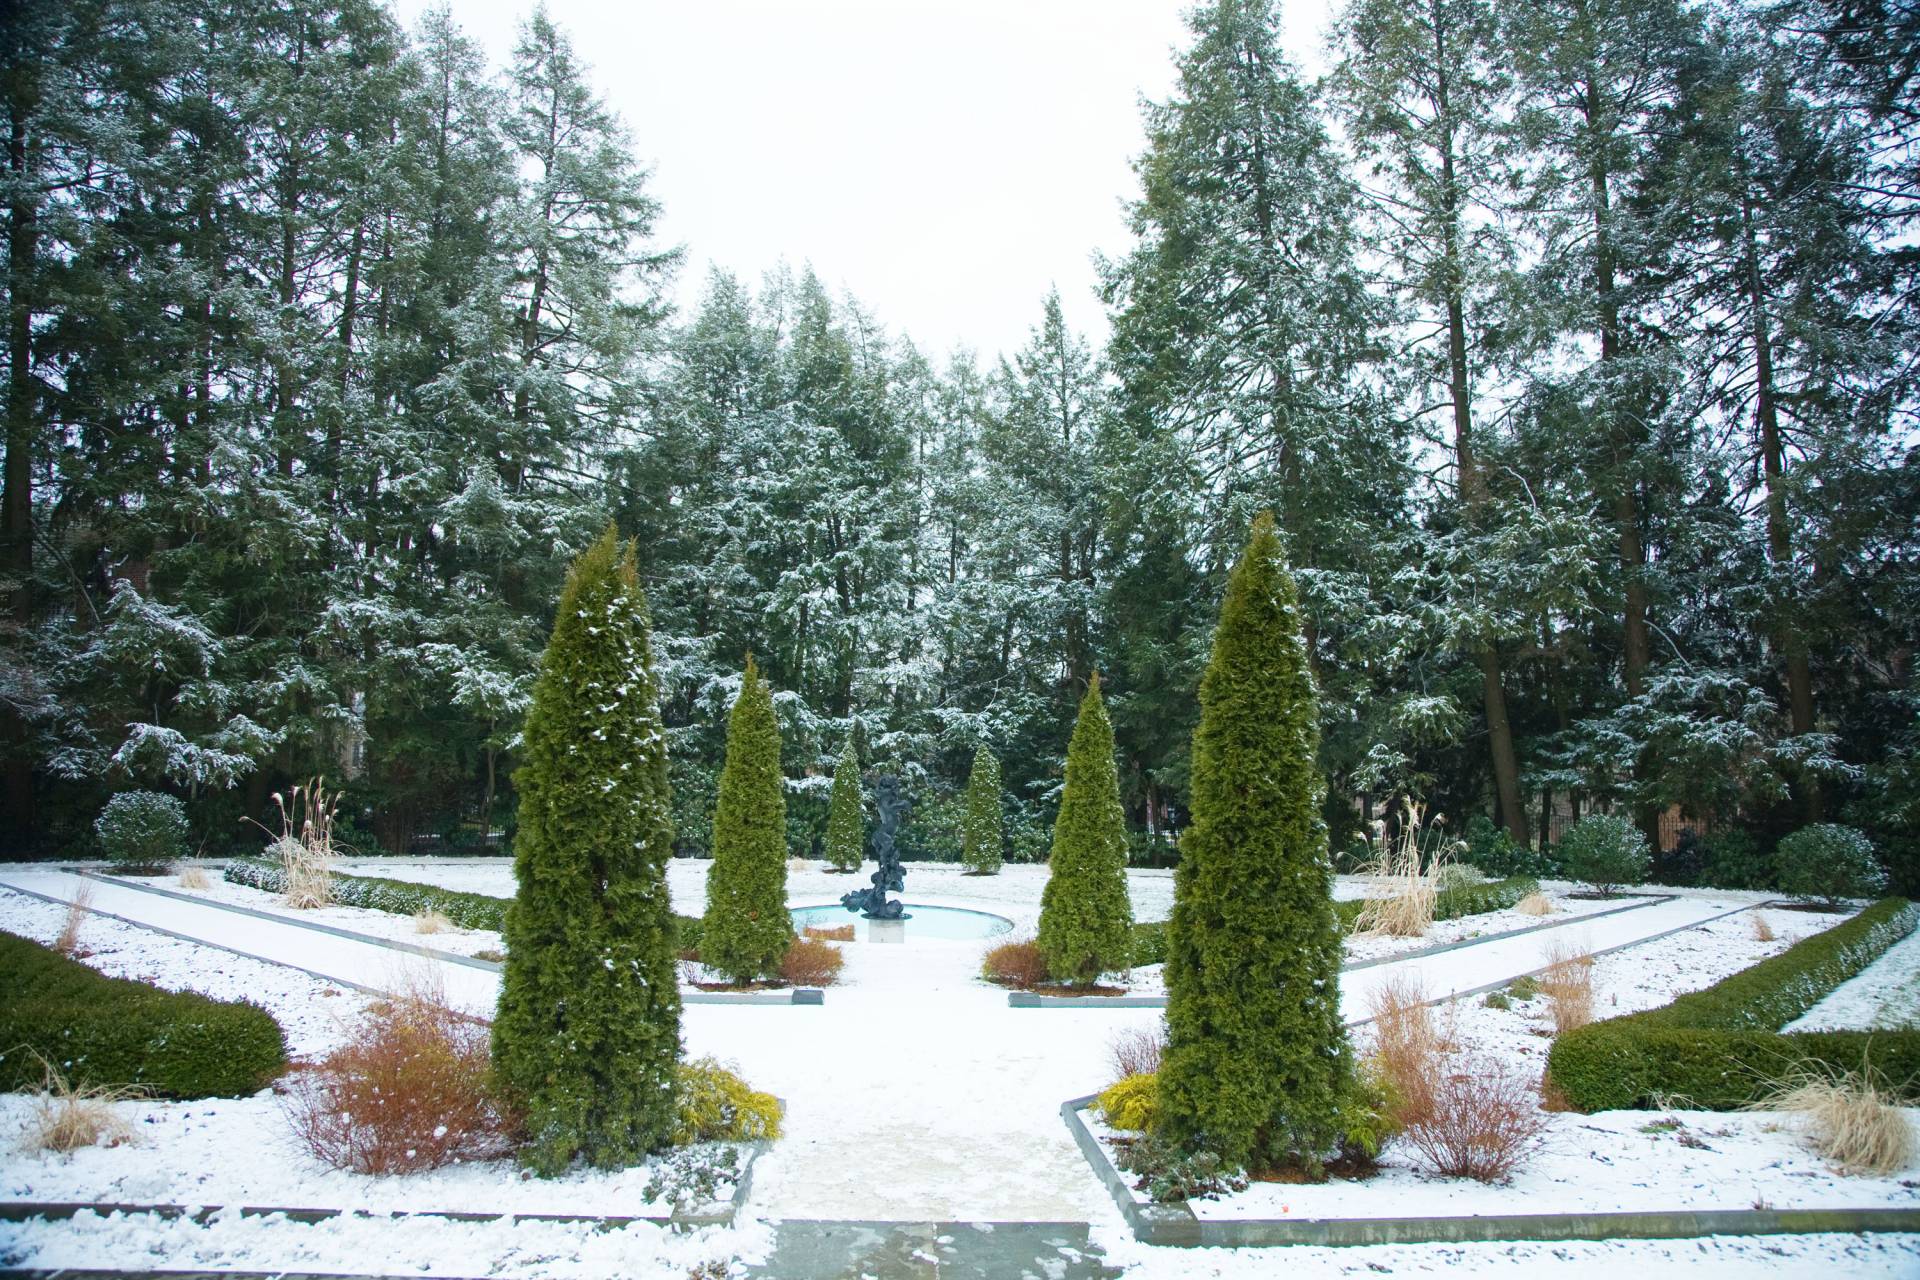 Prospect Garden in the snow